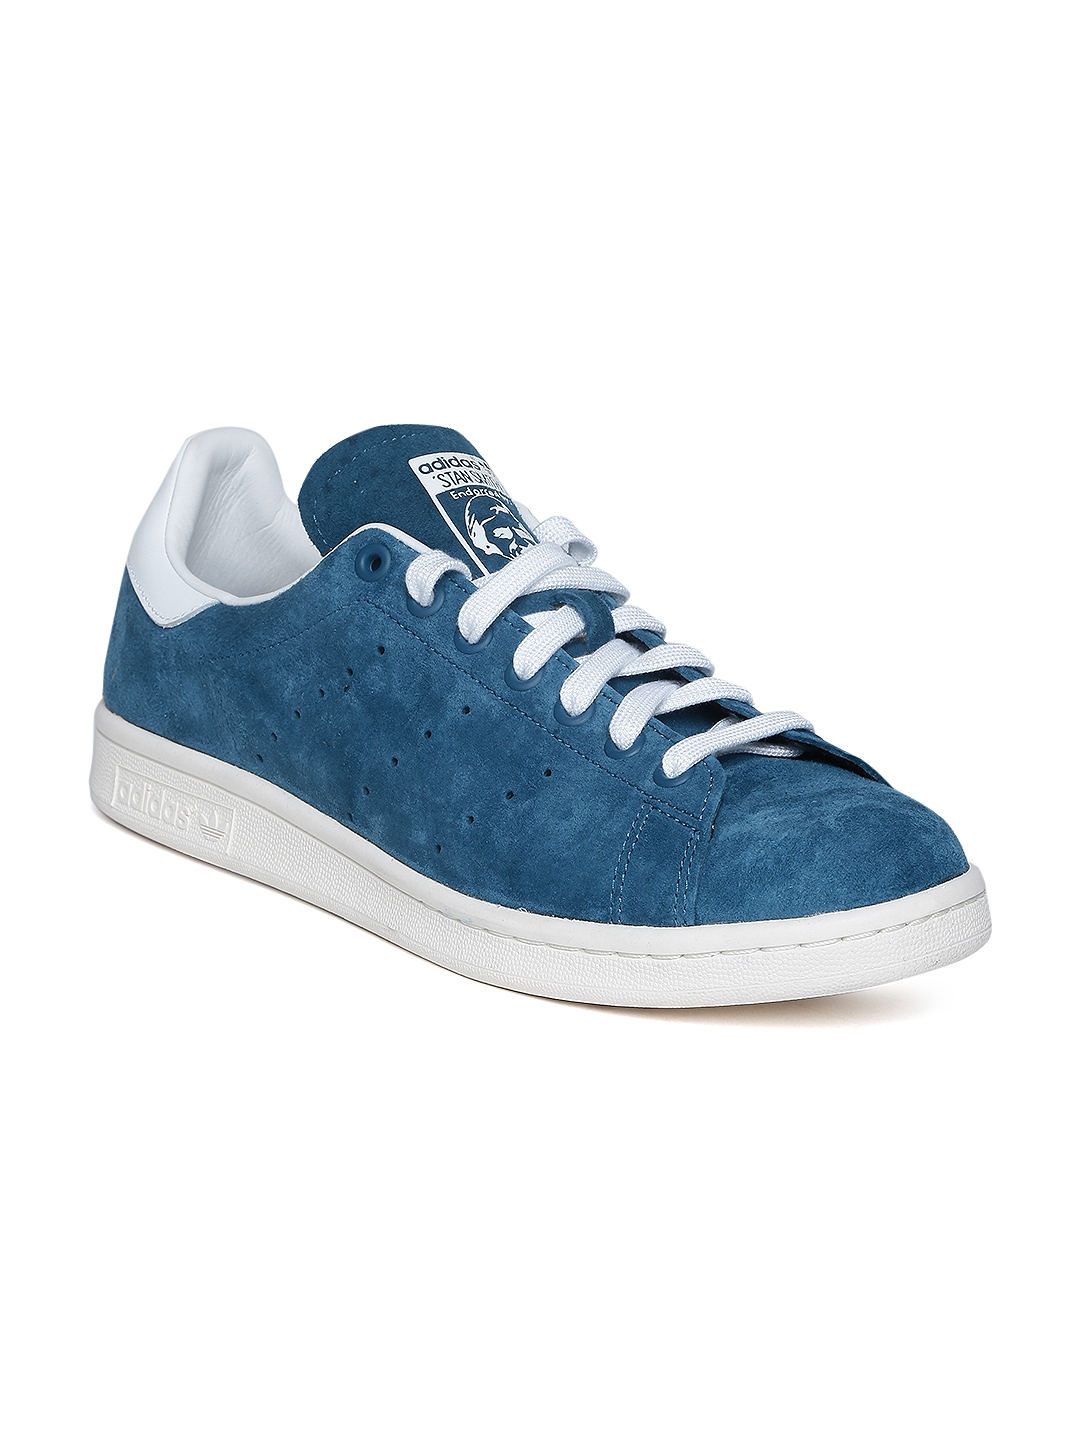 ADIDAS Originals Men Blue Stan Smith Suede Casual Shoes - Casual for Men 569838 |